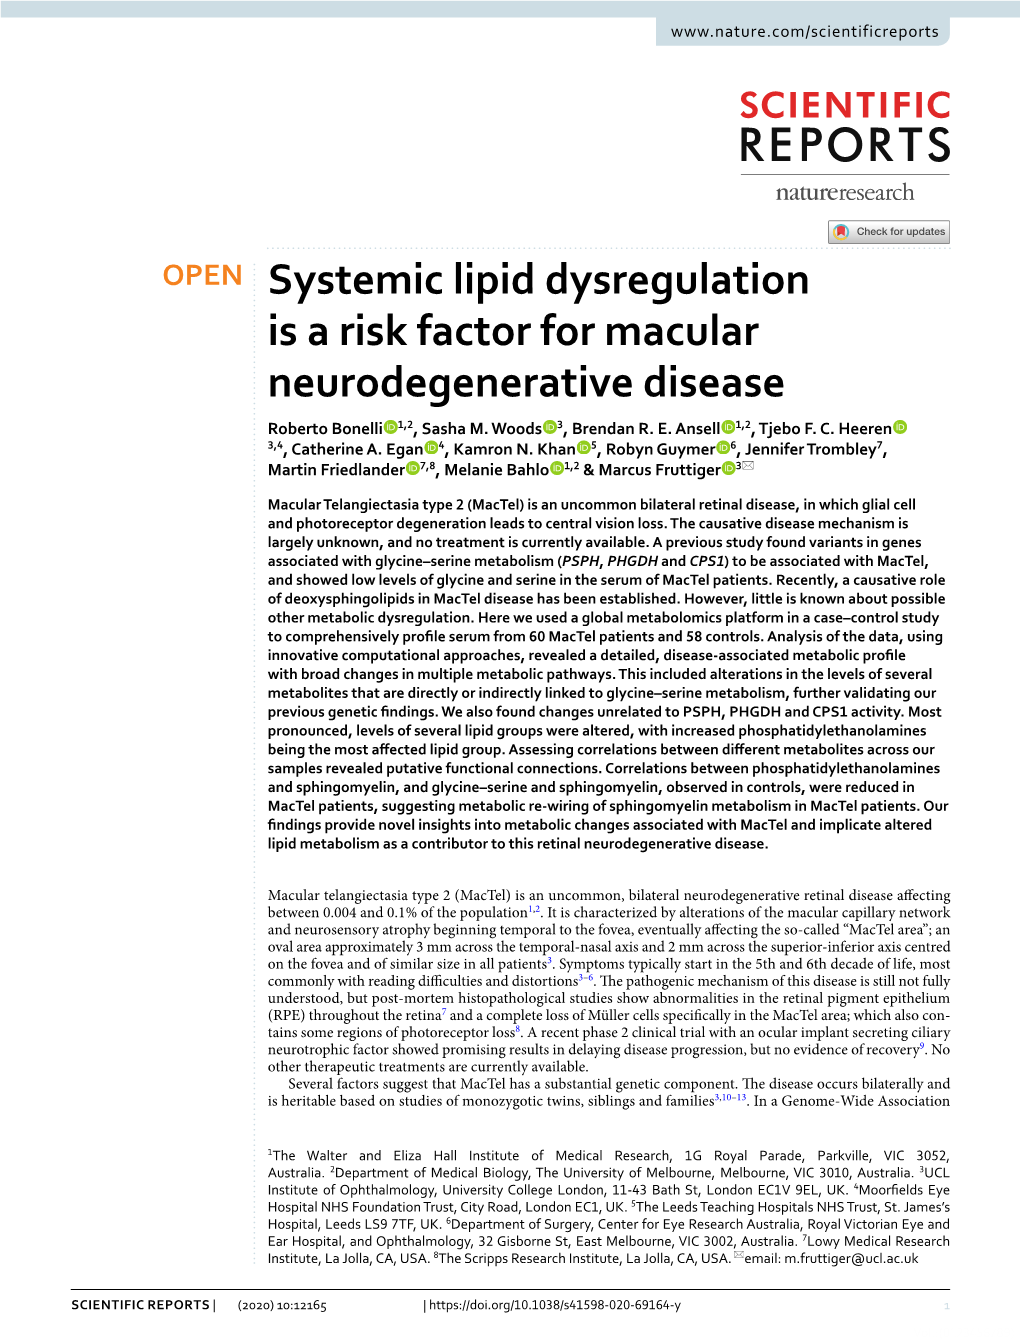 Systemic Lipid Dysregulation Is a Risk Factor for Macular Neurodegenerative Disease Roberto Bonelli 1,2, Sasha M